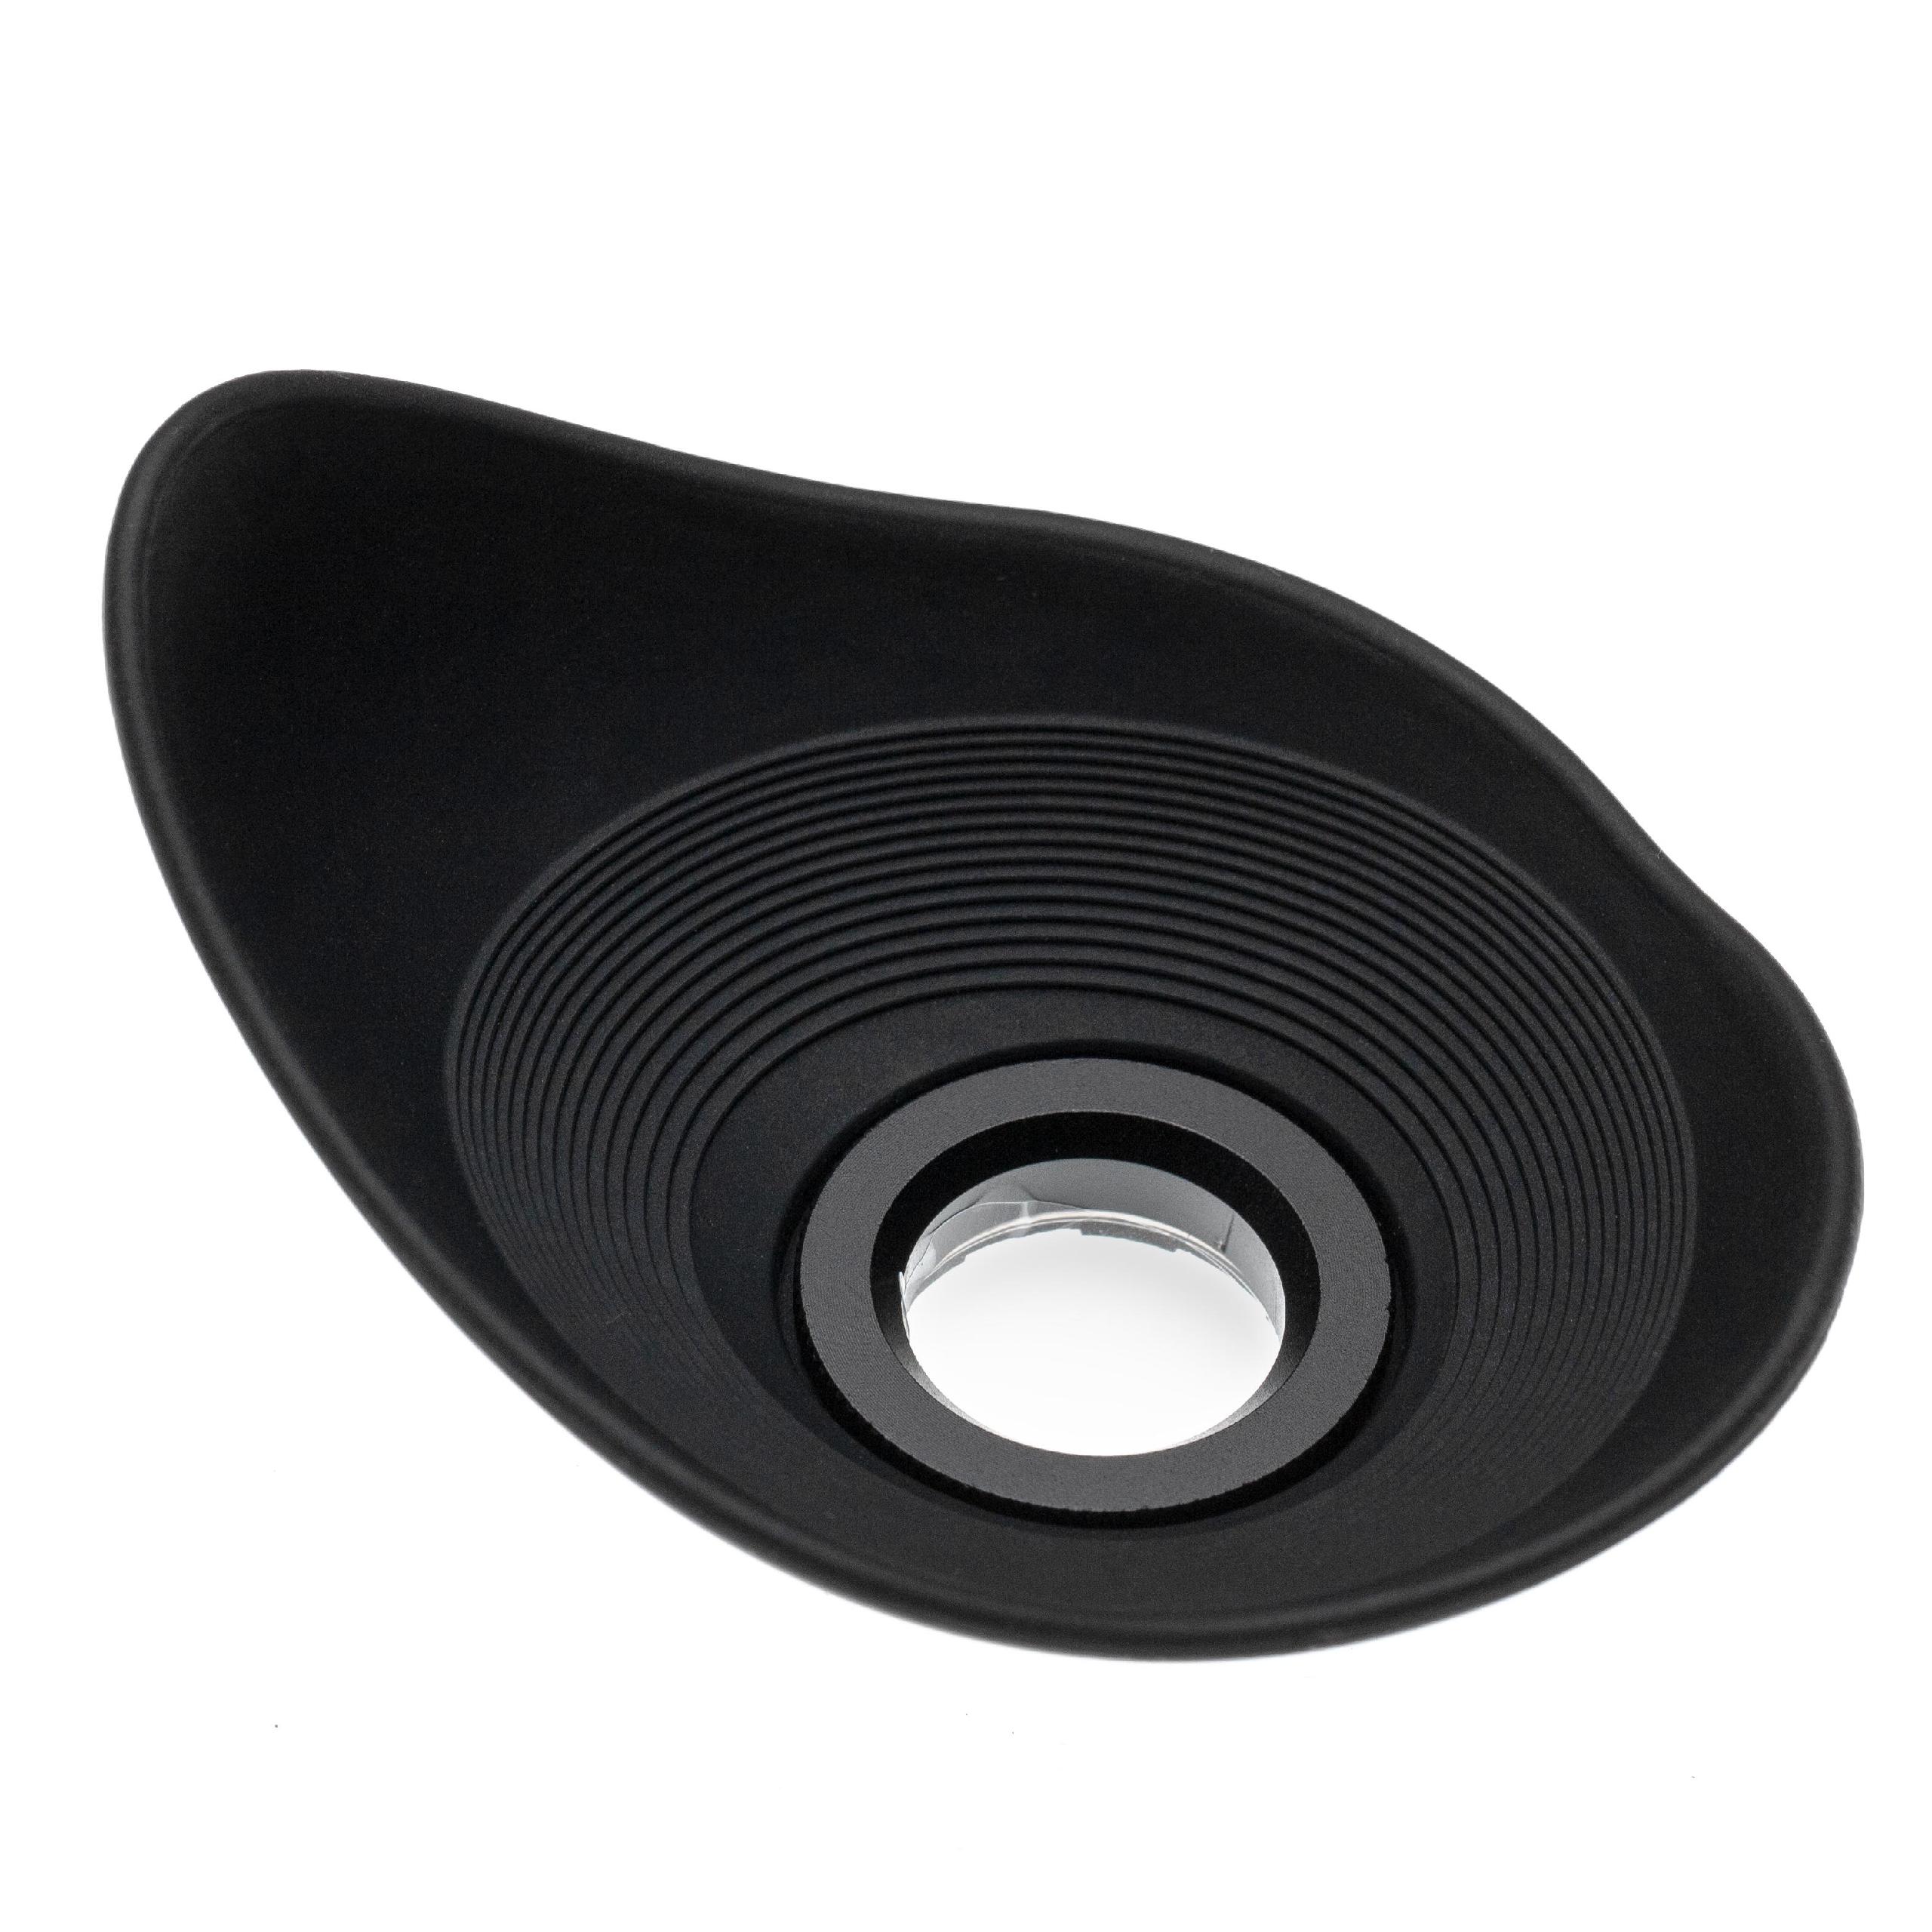 Eye Cup replaces Nikon DK-19 for Nikon D1 etc., Oval, Plastic 